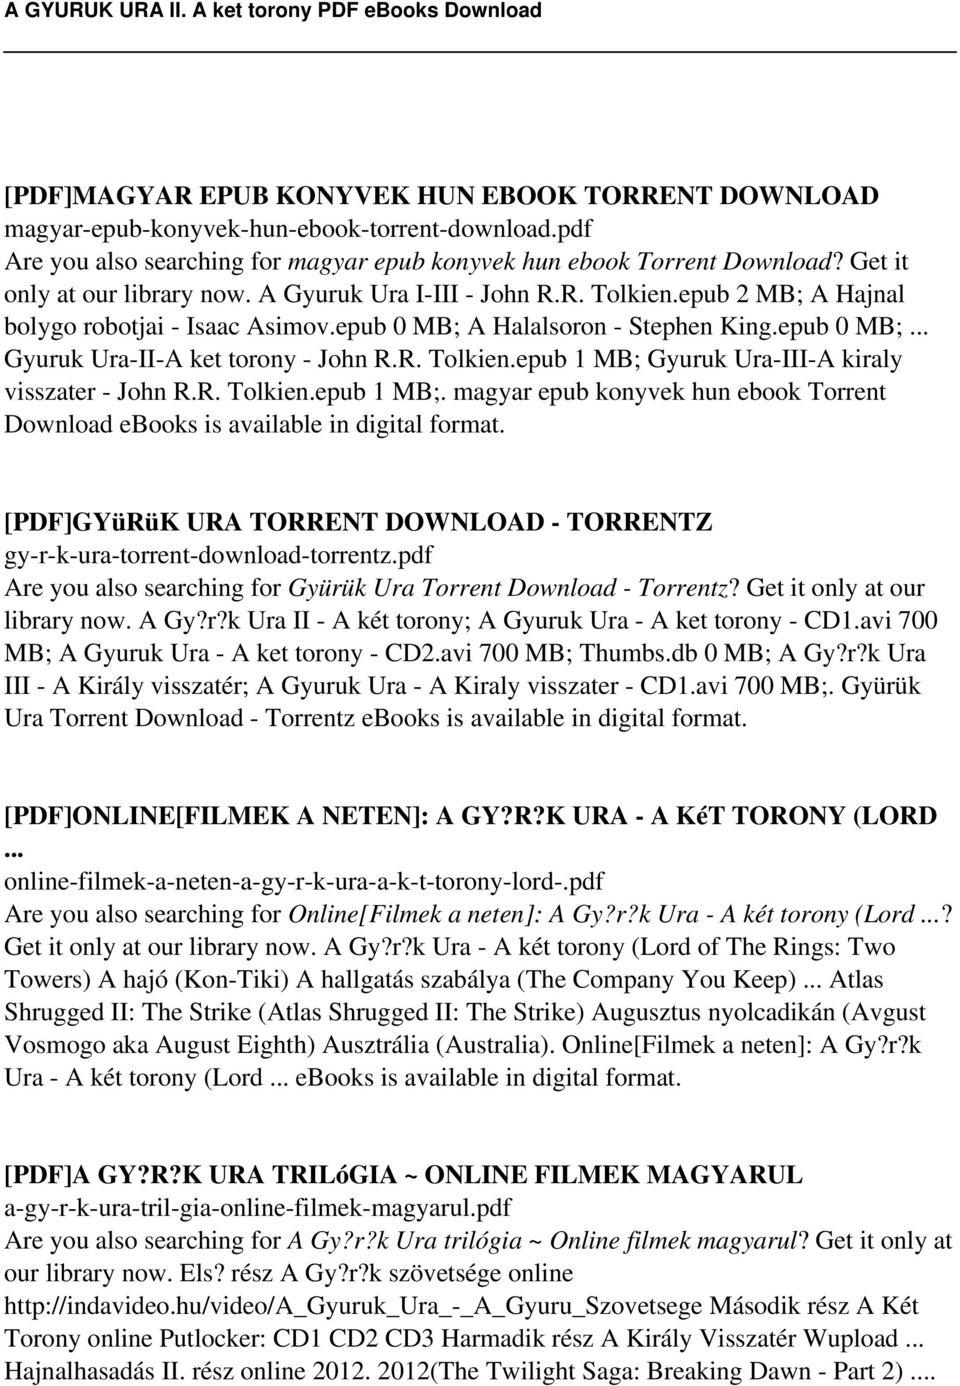 R. Tolkien.epub 1 MB; Gyuruk Ura-III-A kiraly visszater - John R.R. Tolkien.epub 1 MB;. magyar epub konyvek hun ebook Torrent Download ebooks is available in digital format.